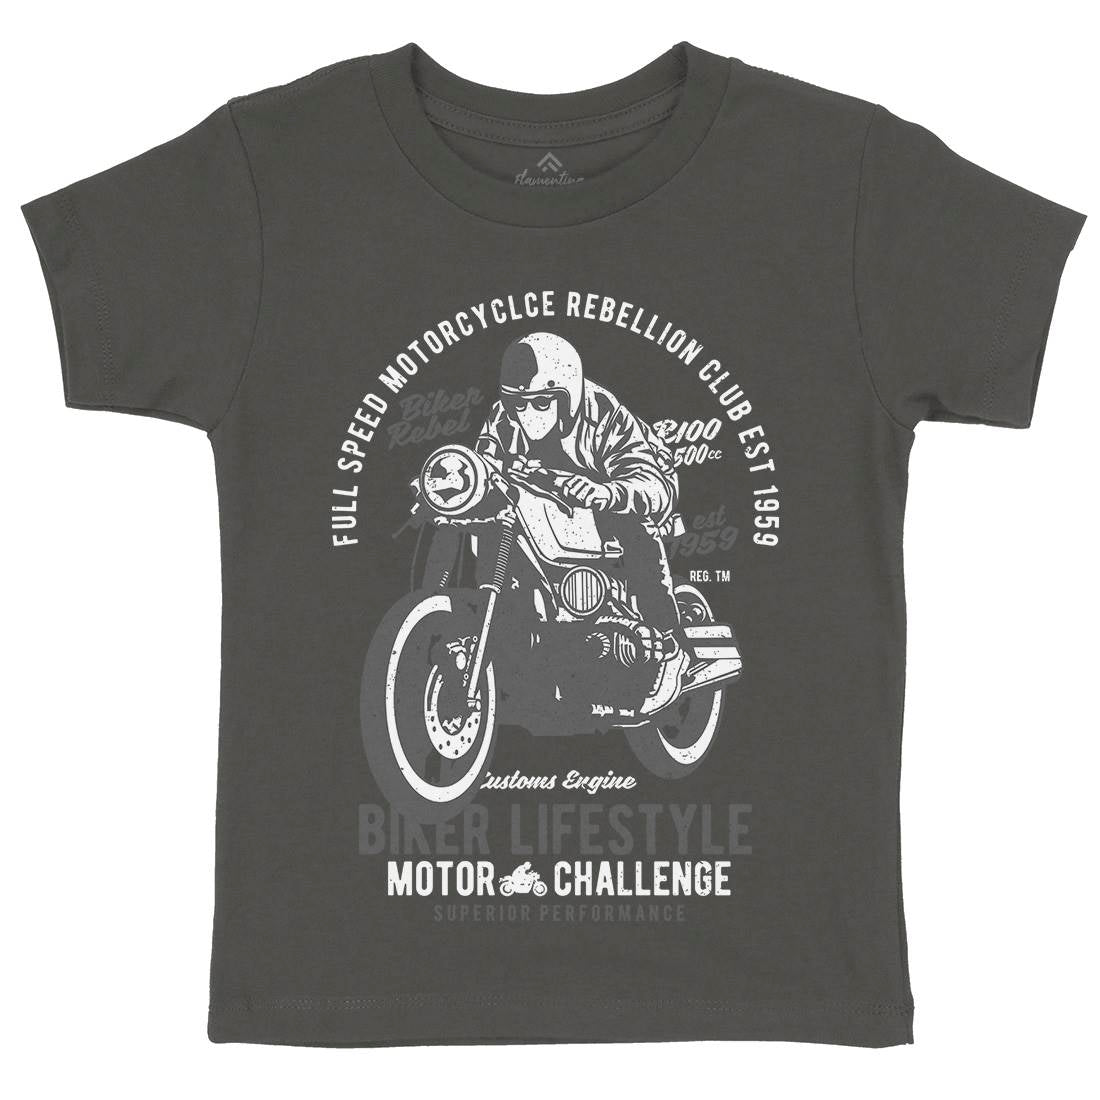 Biker Lifestyle Kids Crew Neck T-Shirt Motorcycles A619